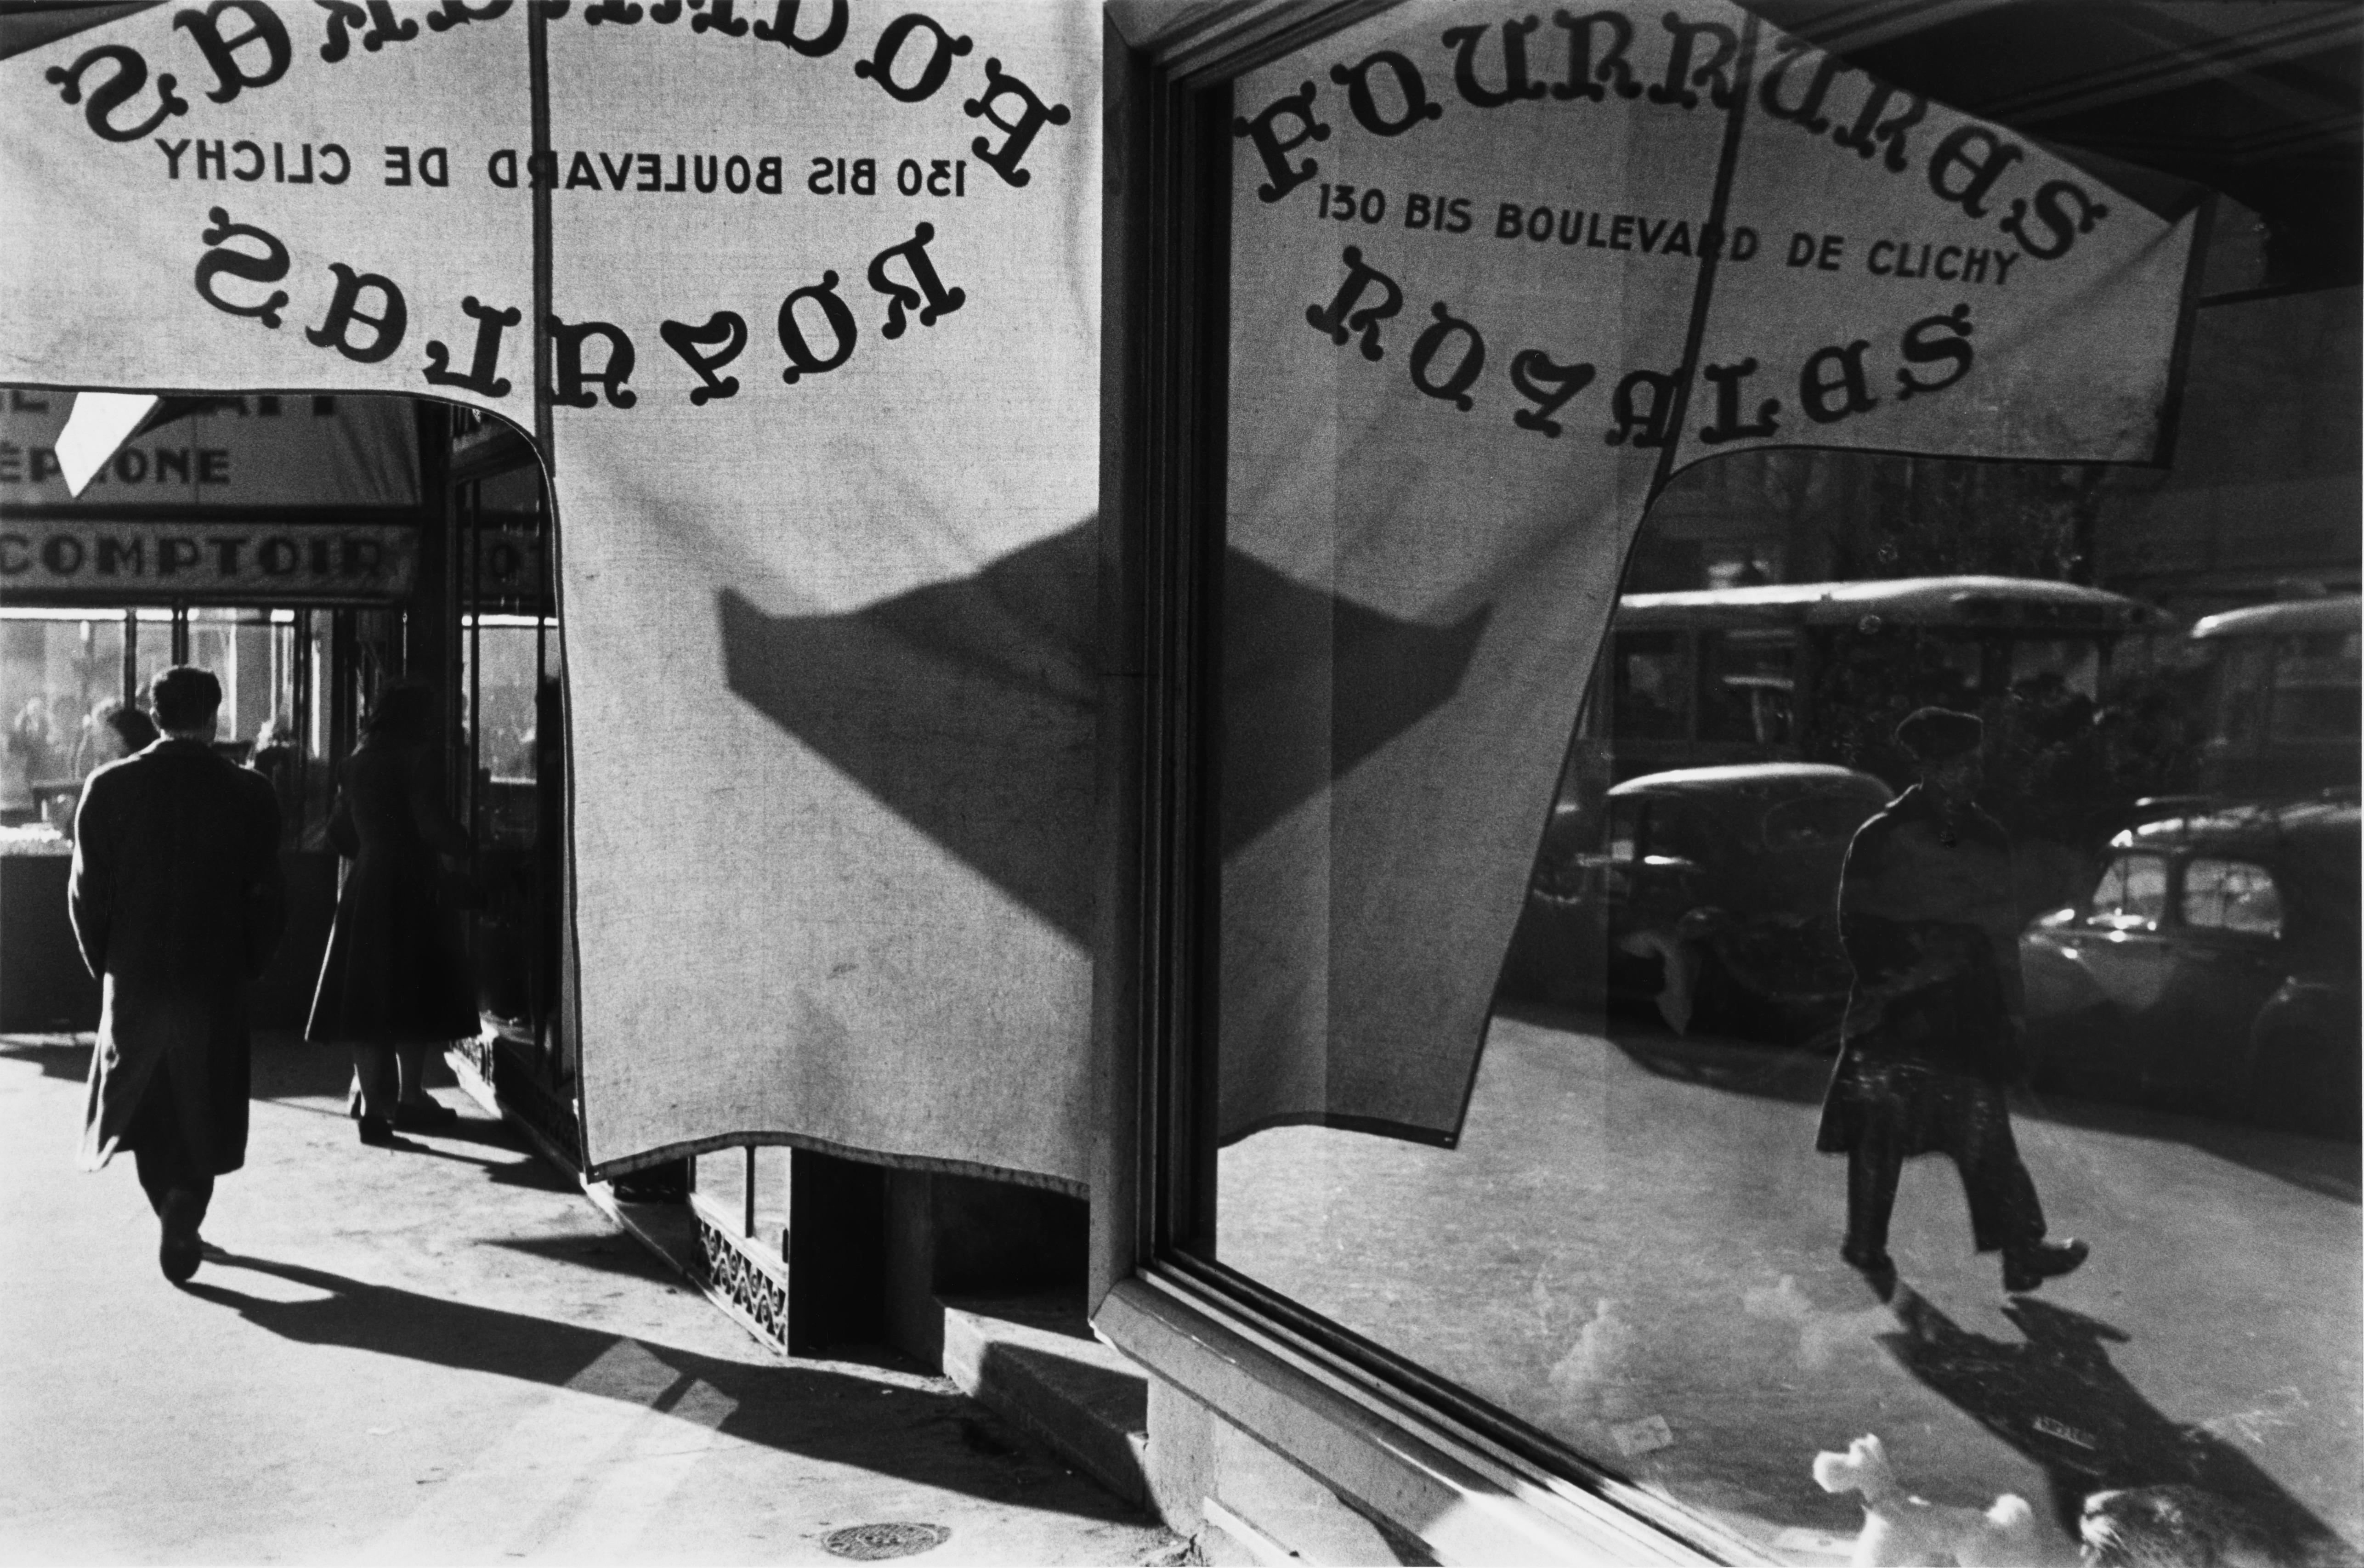 Louis Stettner Black and White Photograph - Boulevard de Clichy